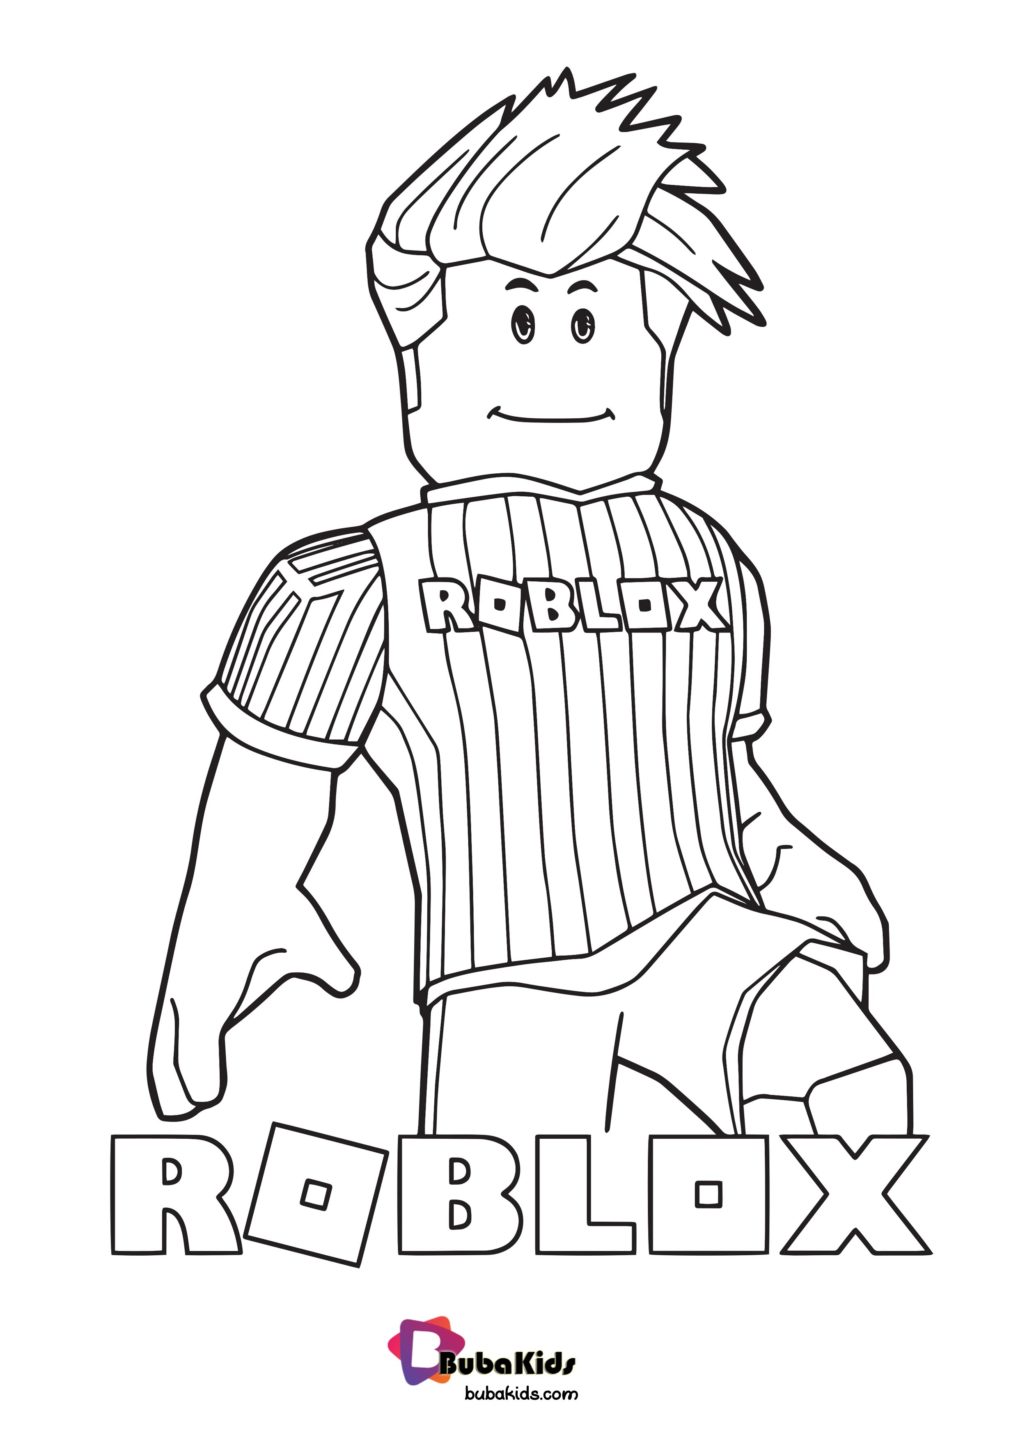 Download Roblox Coloring Page Footballer | BubaKids.com